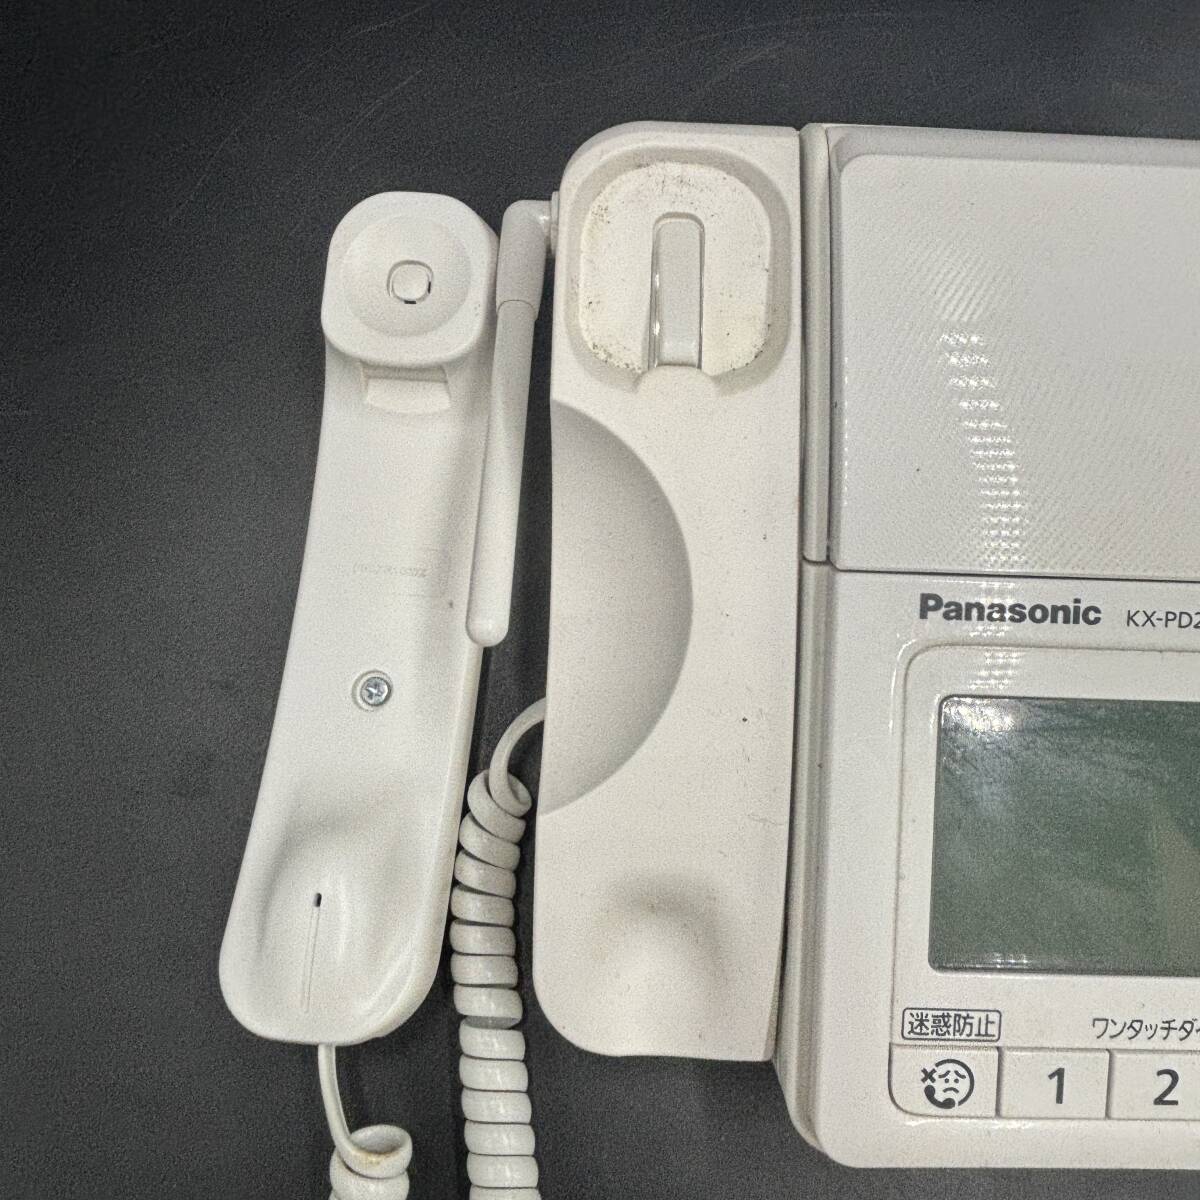 Panasonic/ Panasonic факс phone personal факс ..... родители машина только электризация подтверждено KX-PD205DL